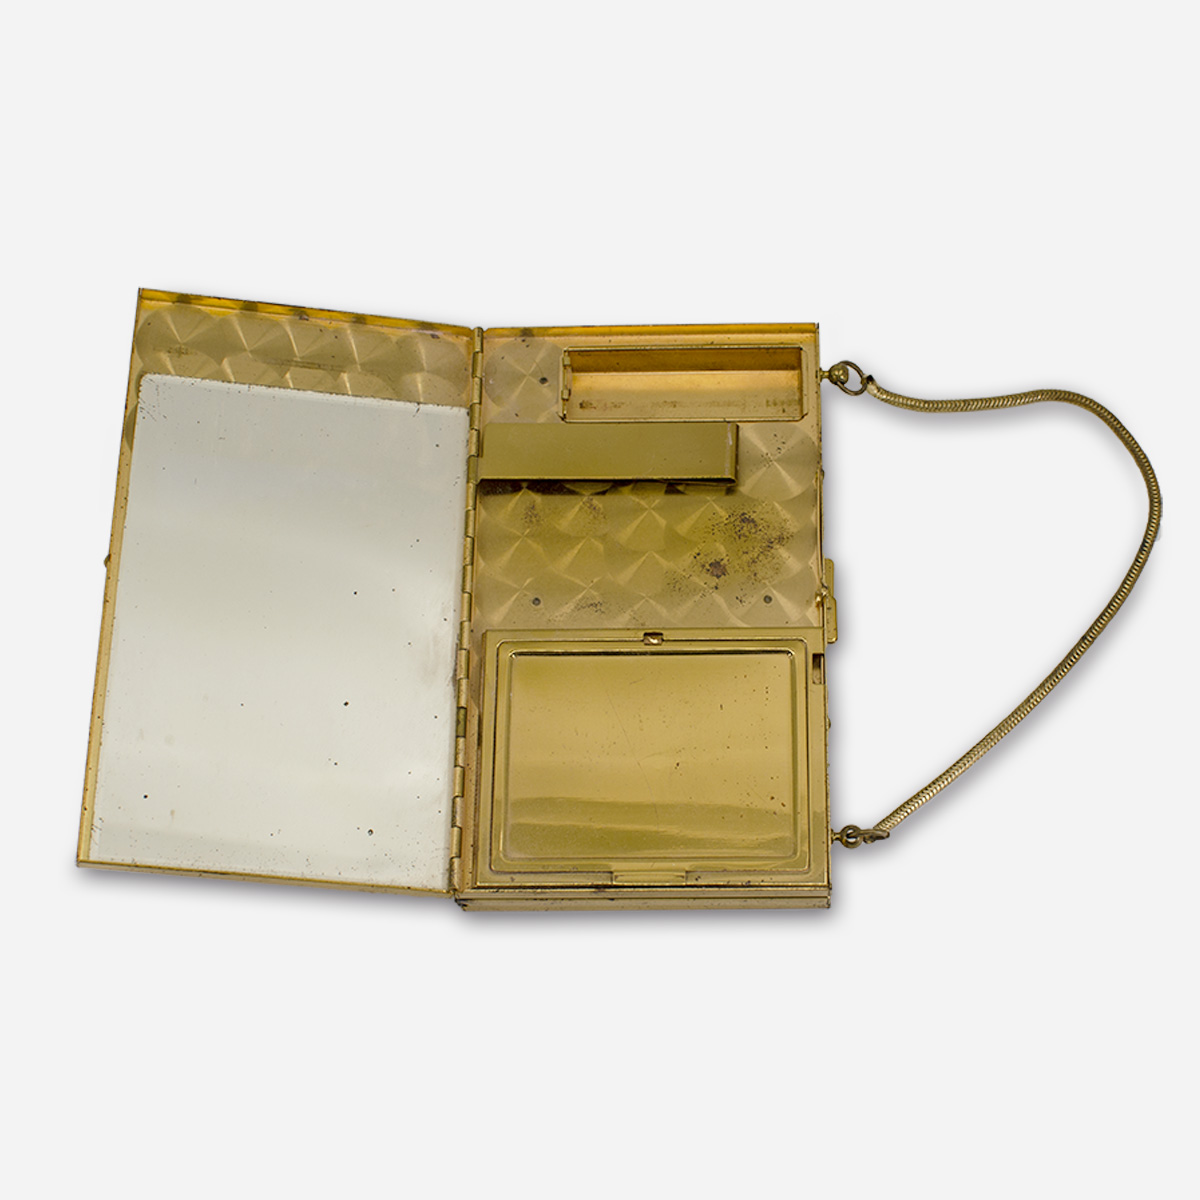 1950s vanity compact purse